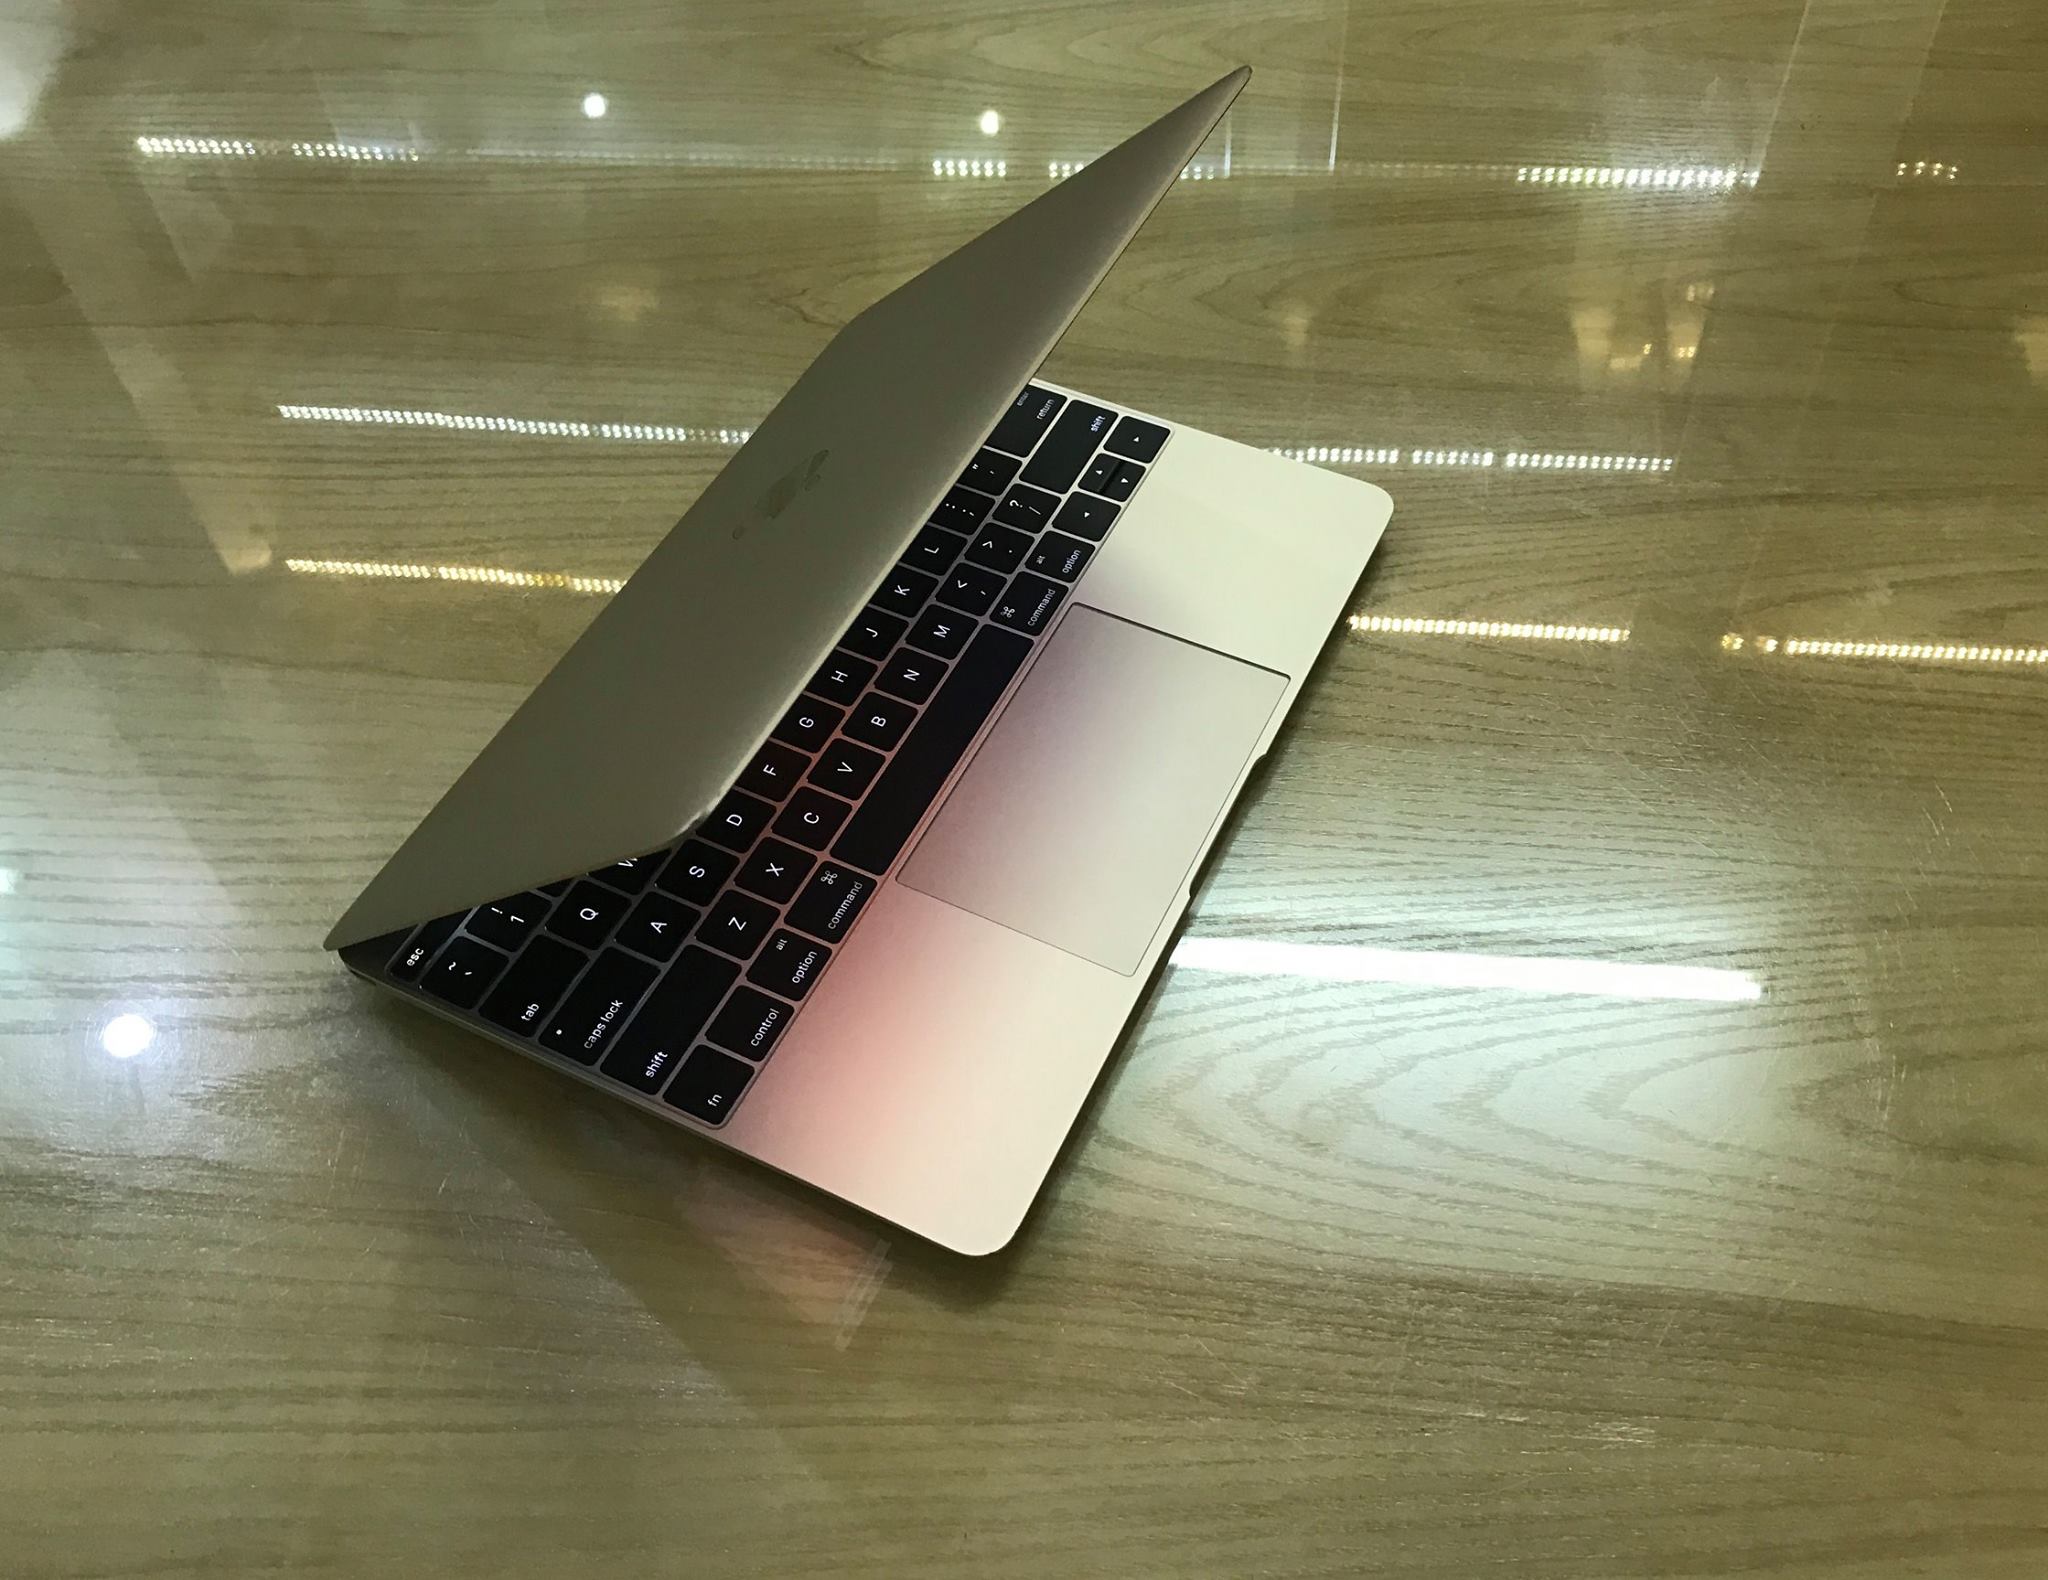 The New Macbook 1.2GHz 512GB-5.jpg